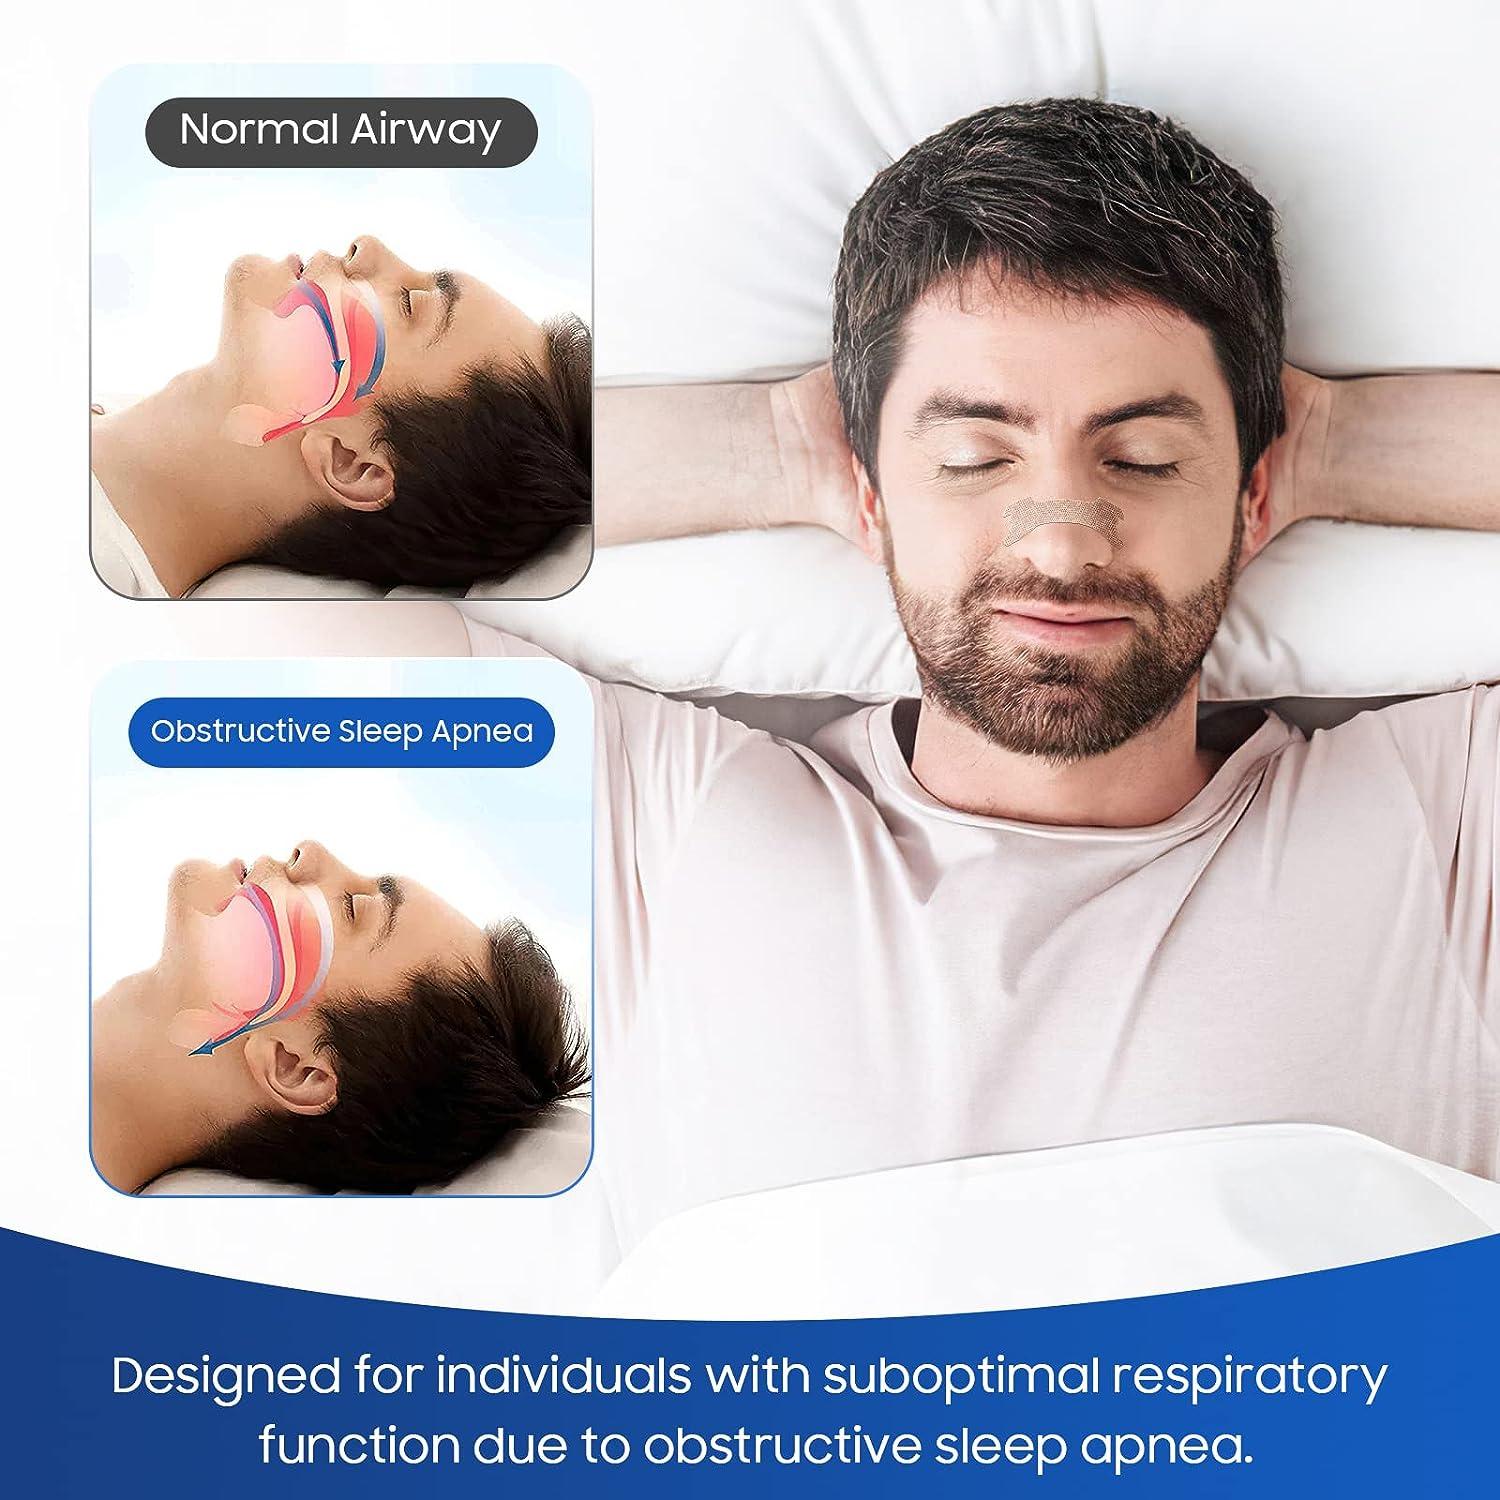 Can Nasal Strips Treat Sleep Apnea?